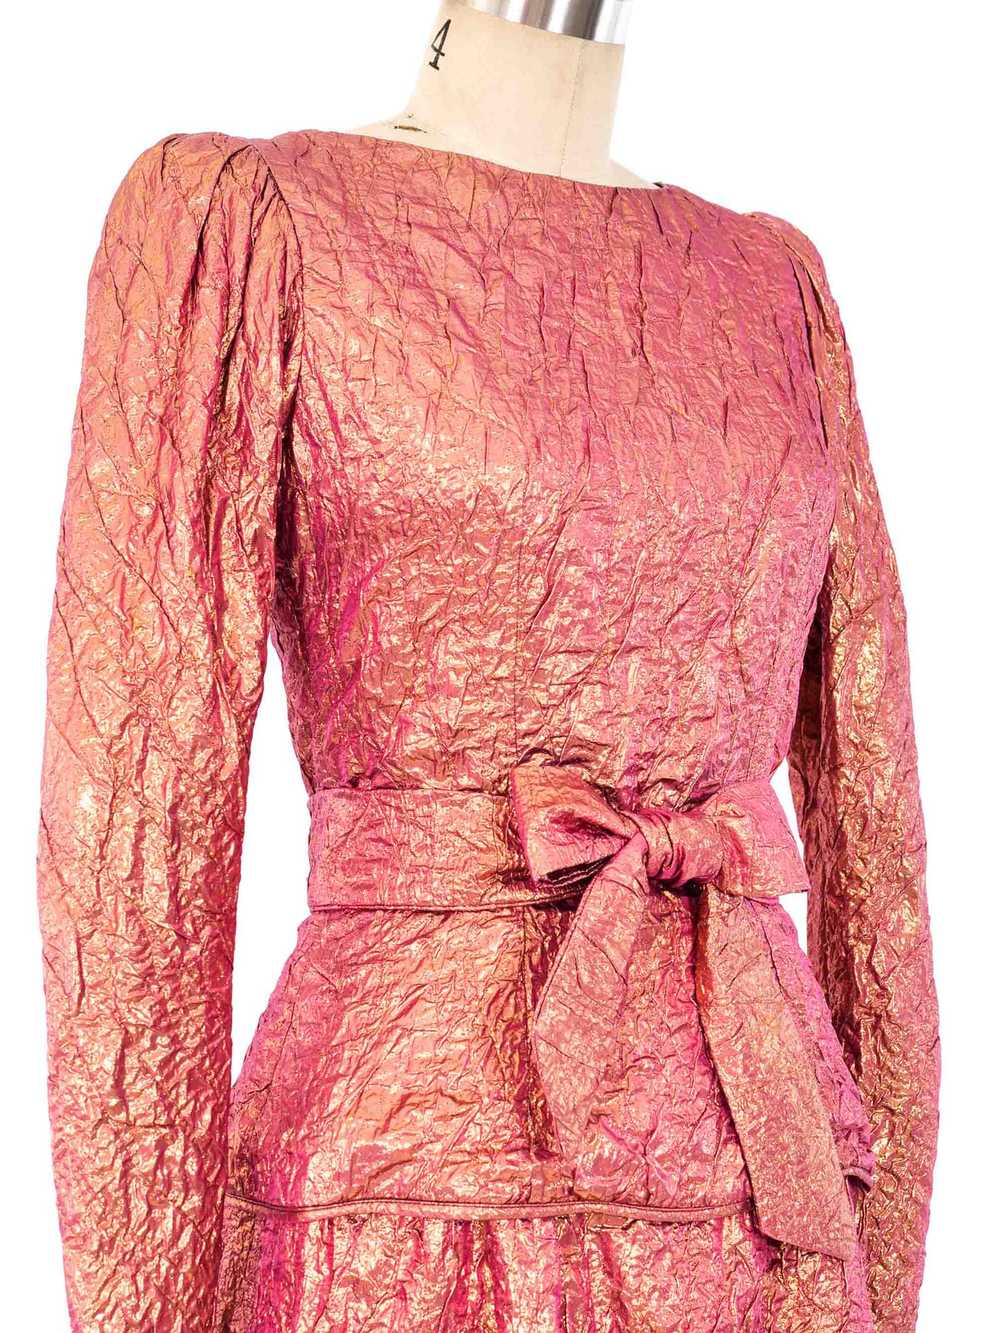 Adolfo Rose Gold Textured Skirt Ensemble - image 4